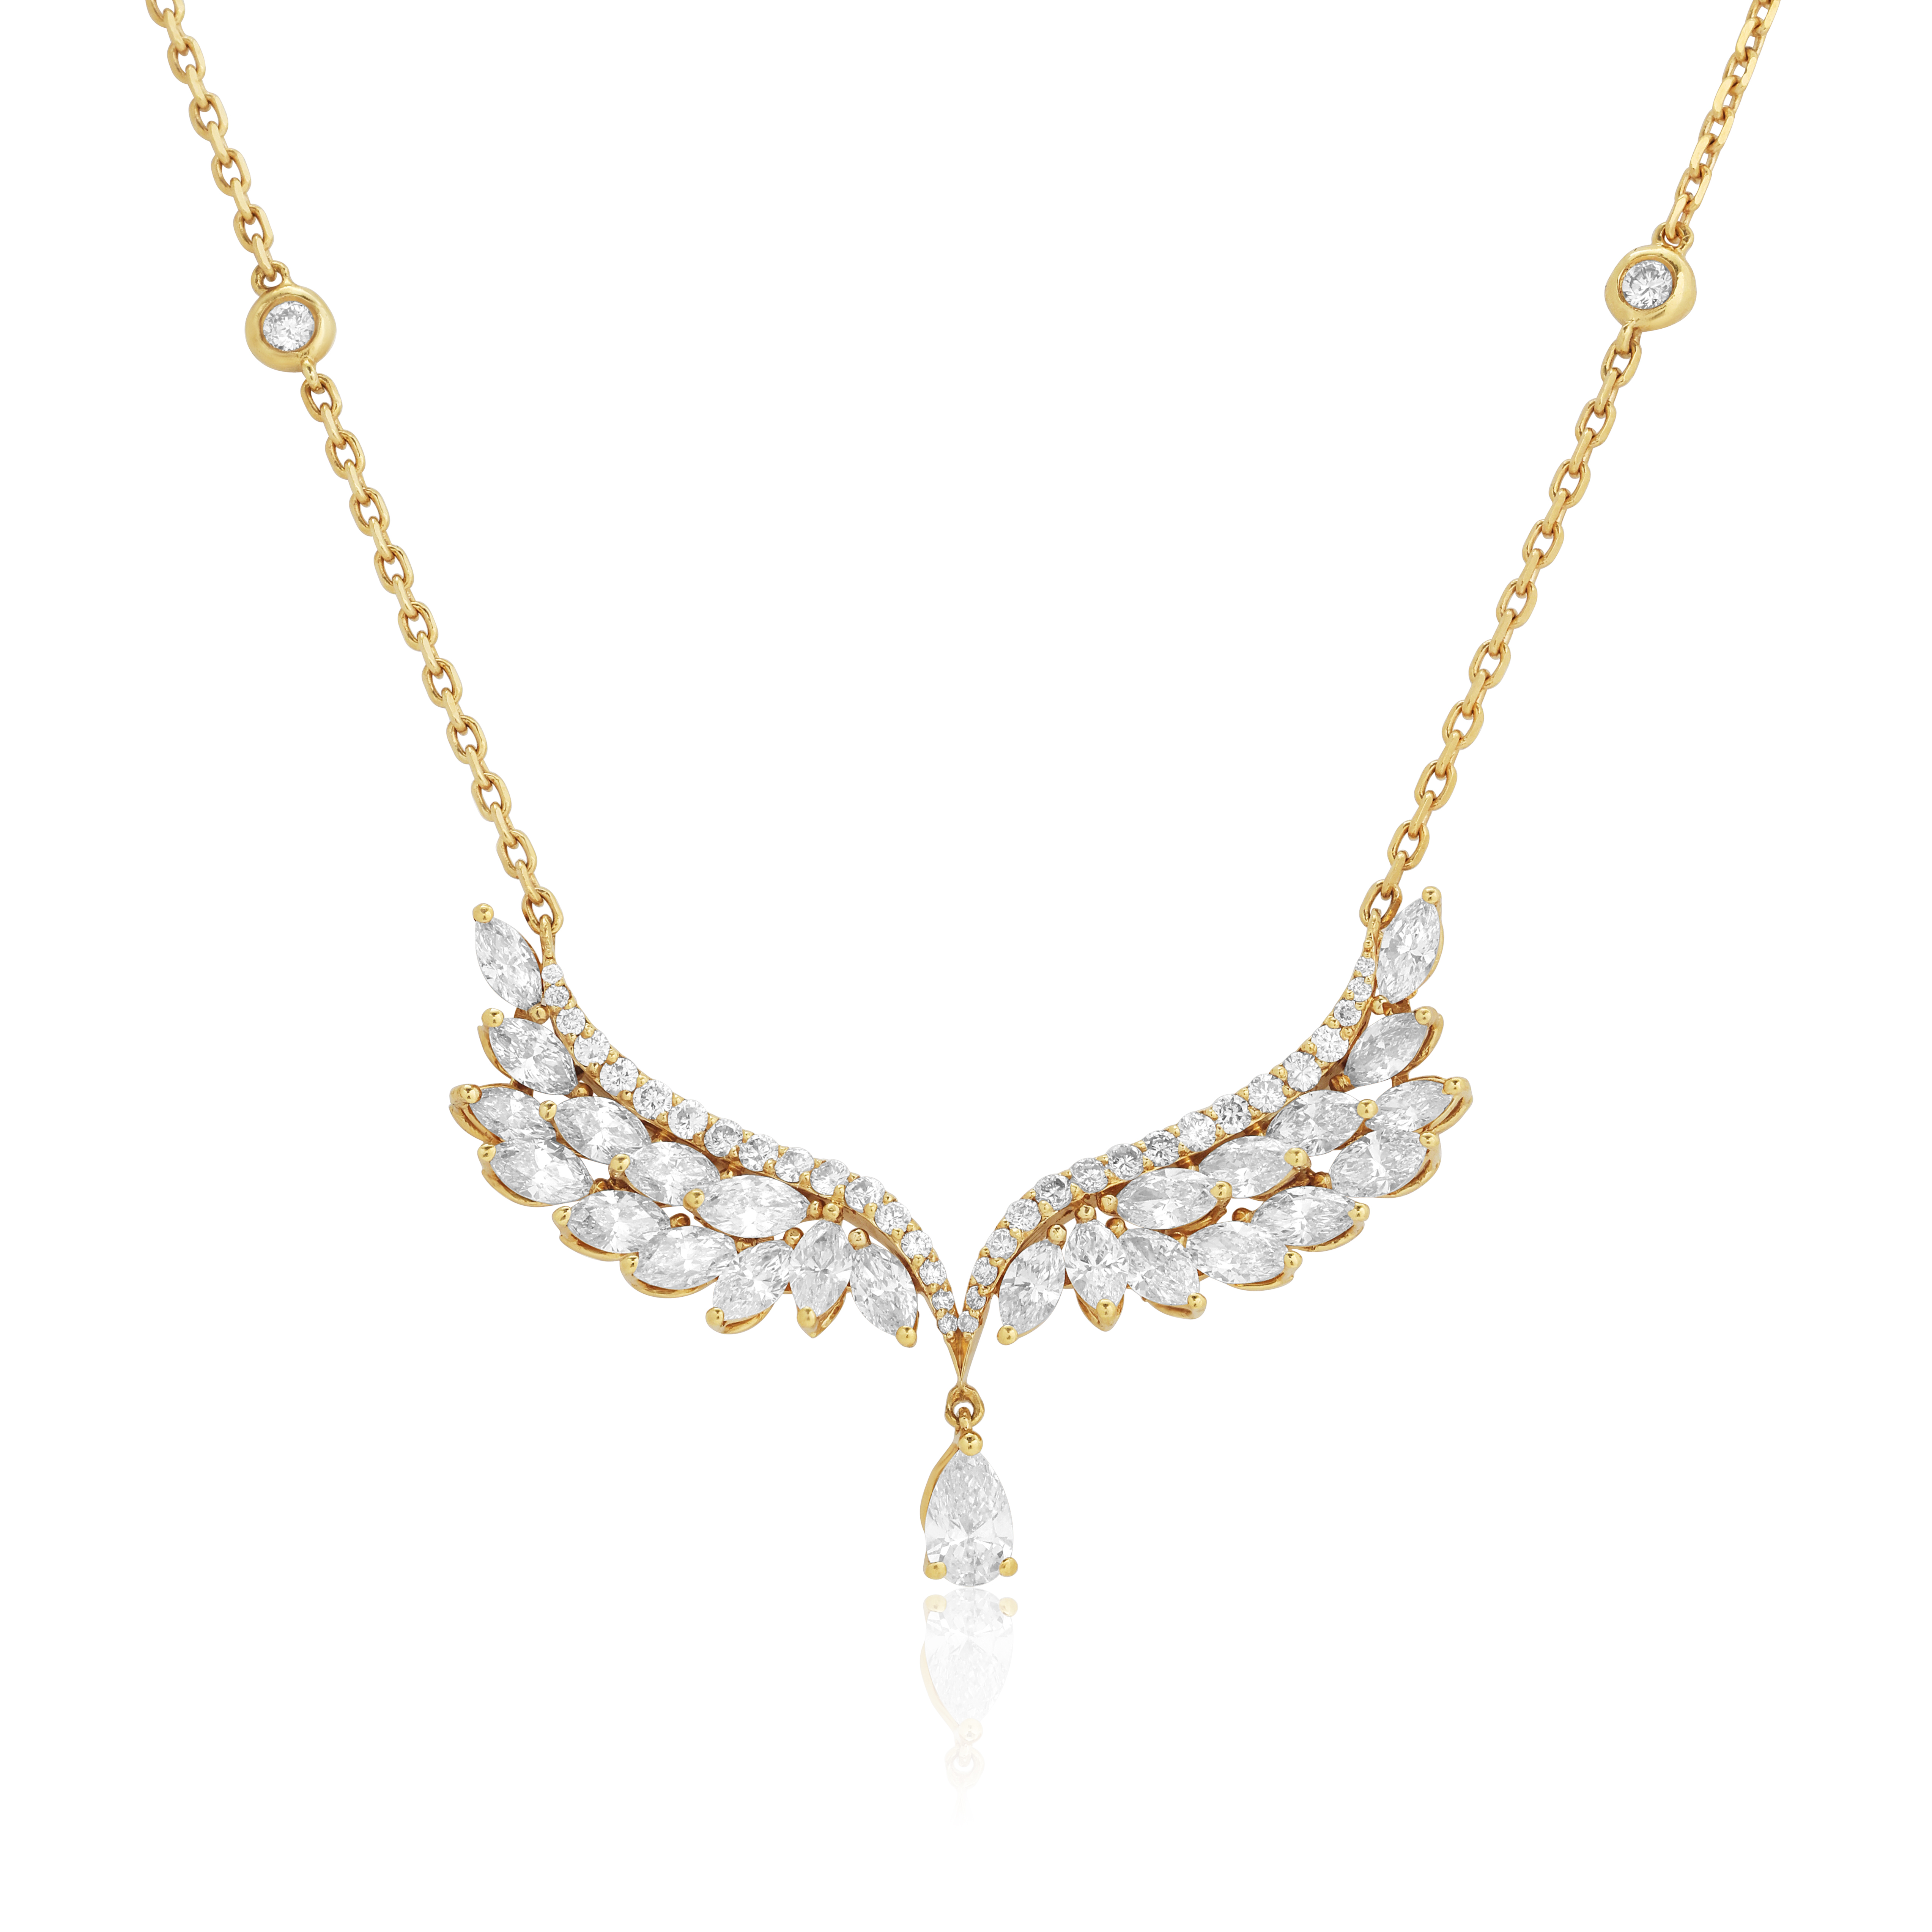 Yvan Tufenkjian 18k Yellow Gold and Diamond Pendant Necklace